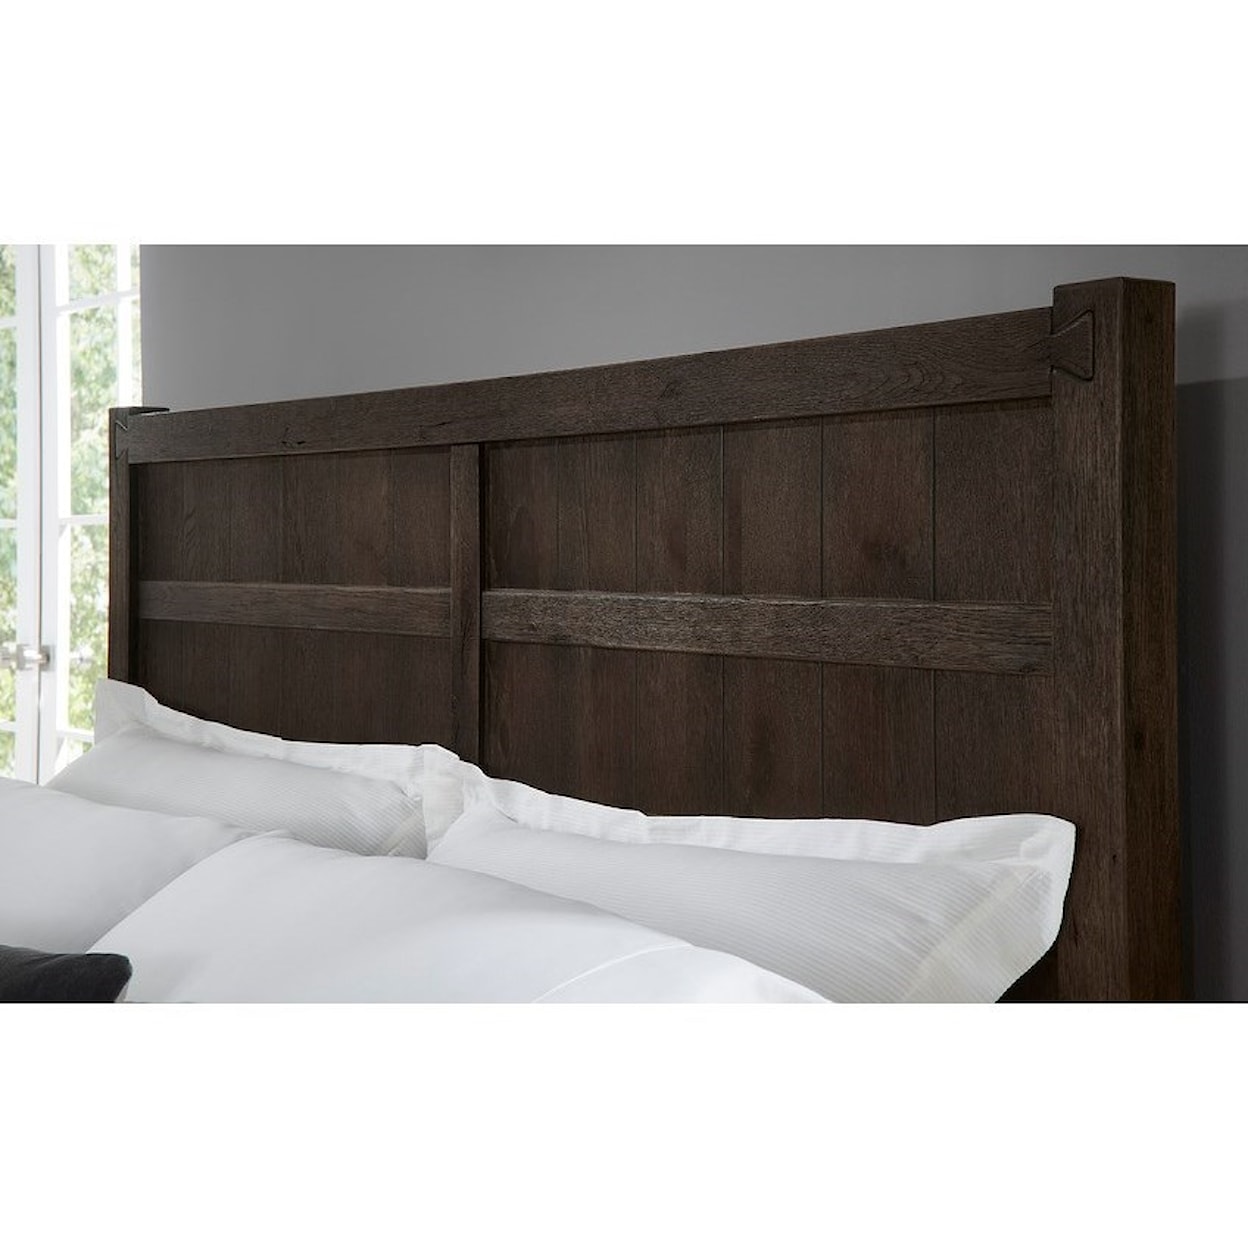 Vaughan Bassett Dovetail Bedroom King Board and Batten Bed